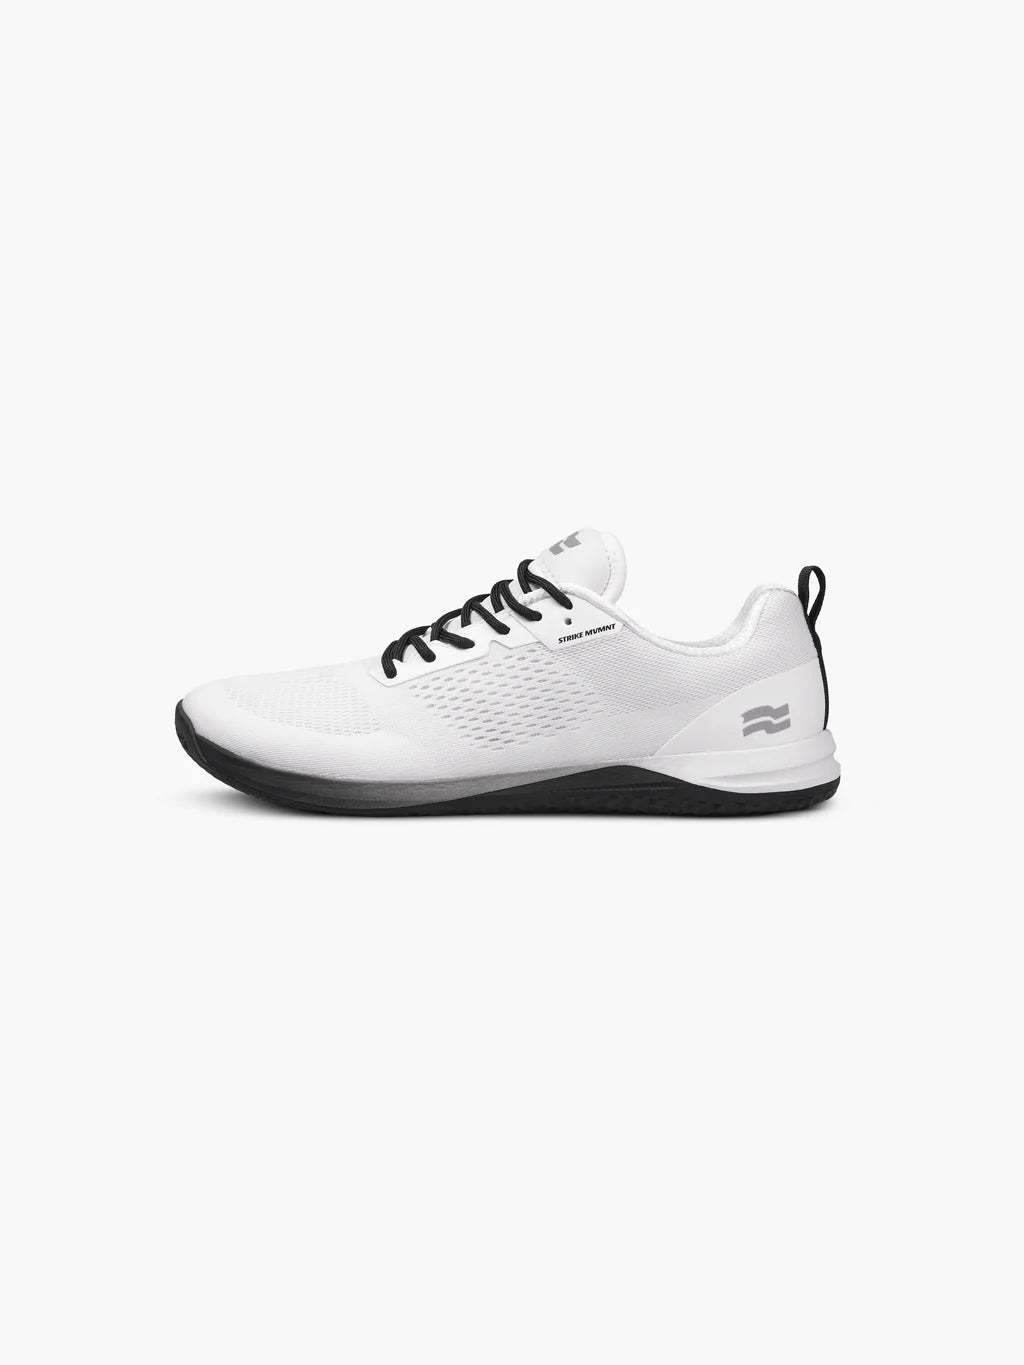 STRIKE MVMNT Haze Training Shoes Bright White / Fade